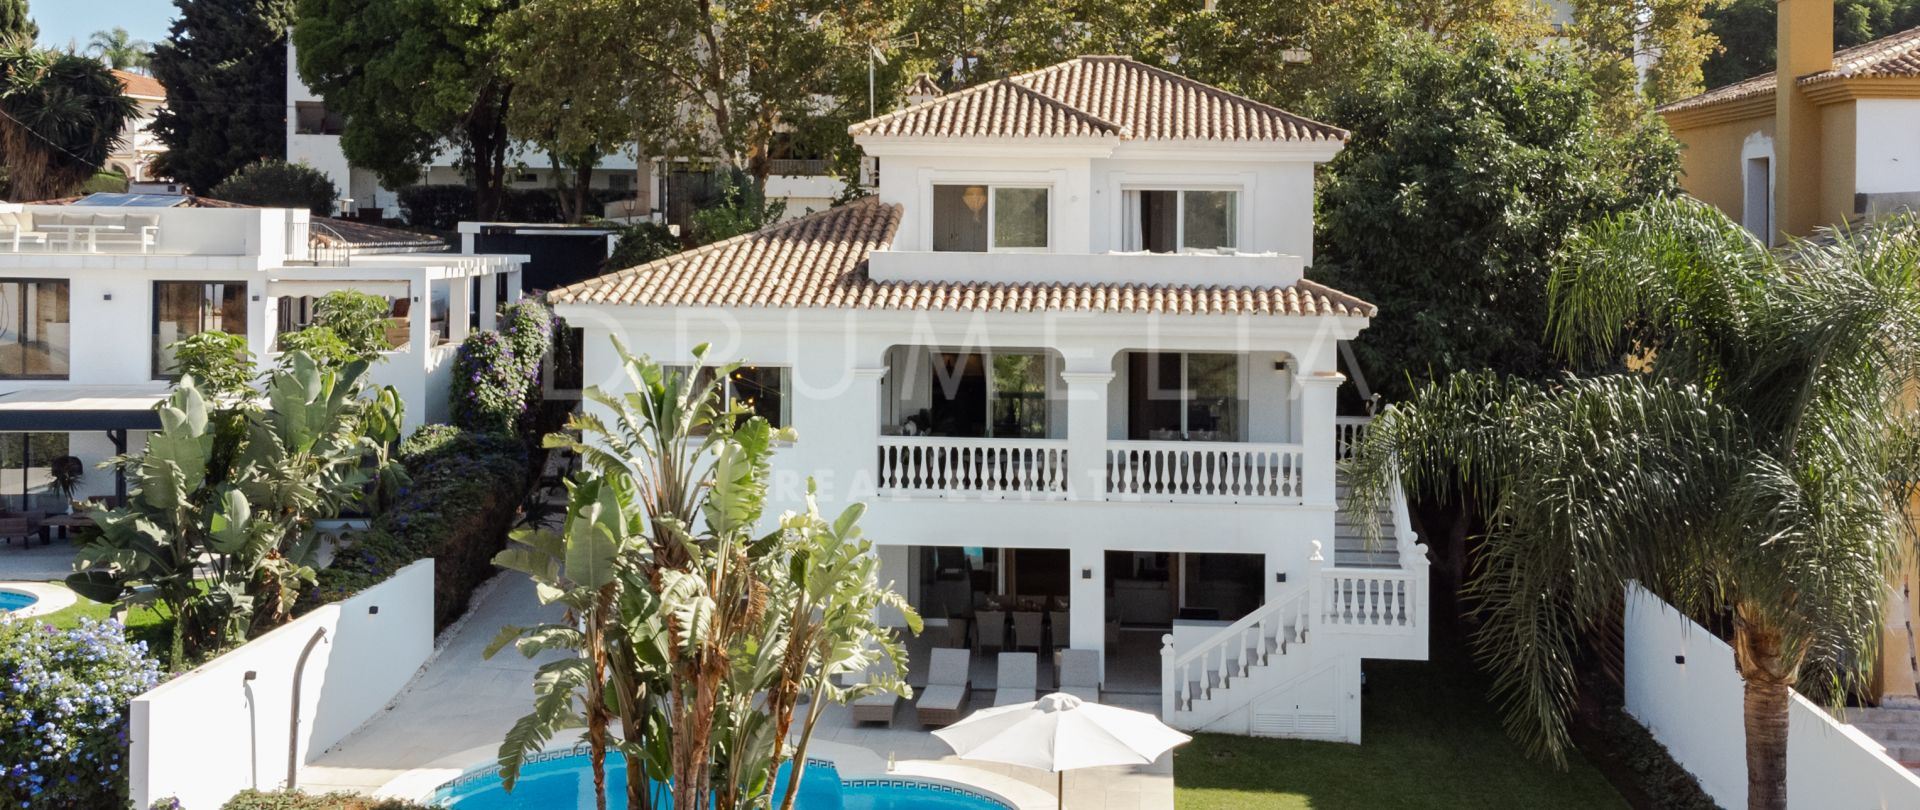 Fantastique villa méditerranéenne au design scandinave moderne à vendre à Nueva Andalucia Marbella.